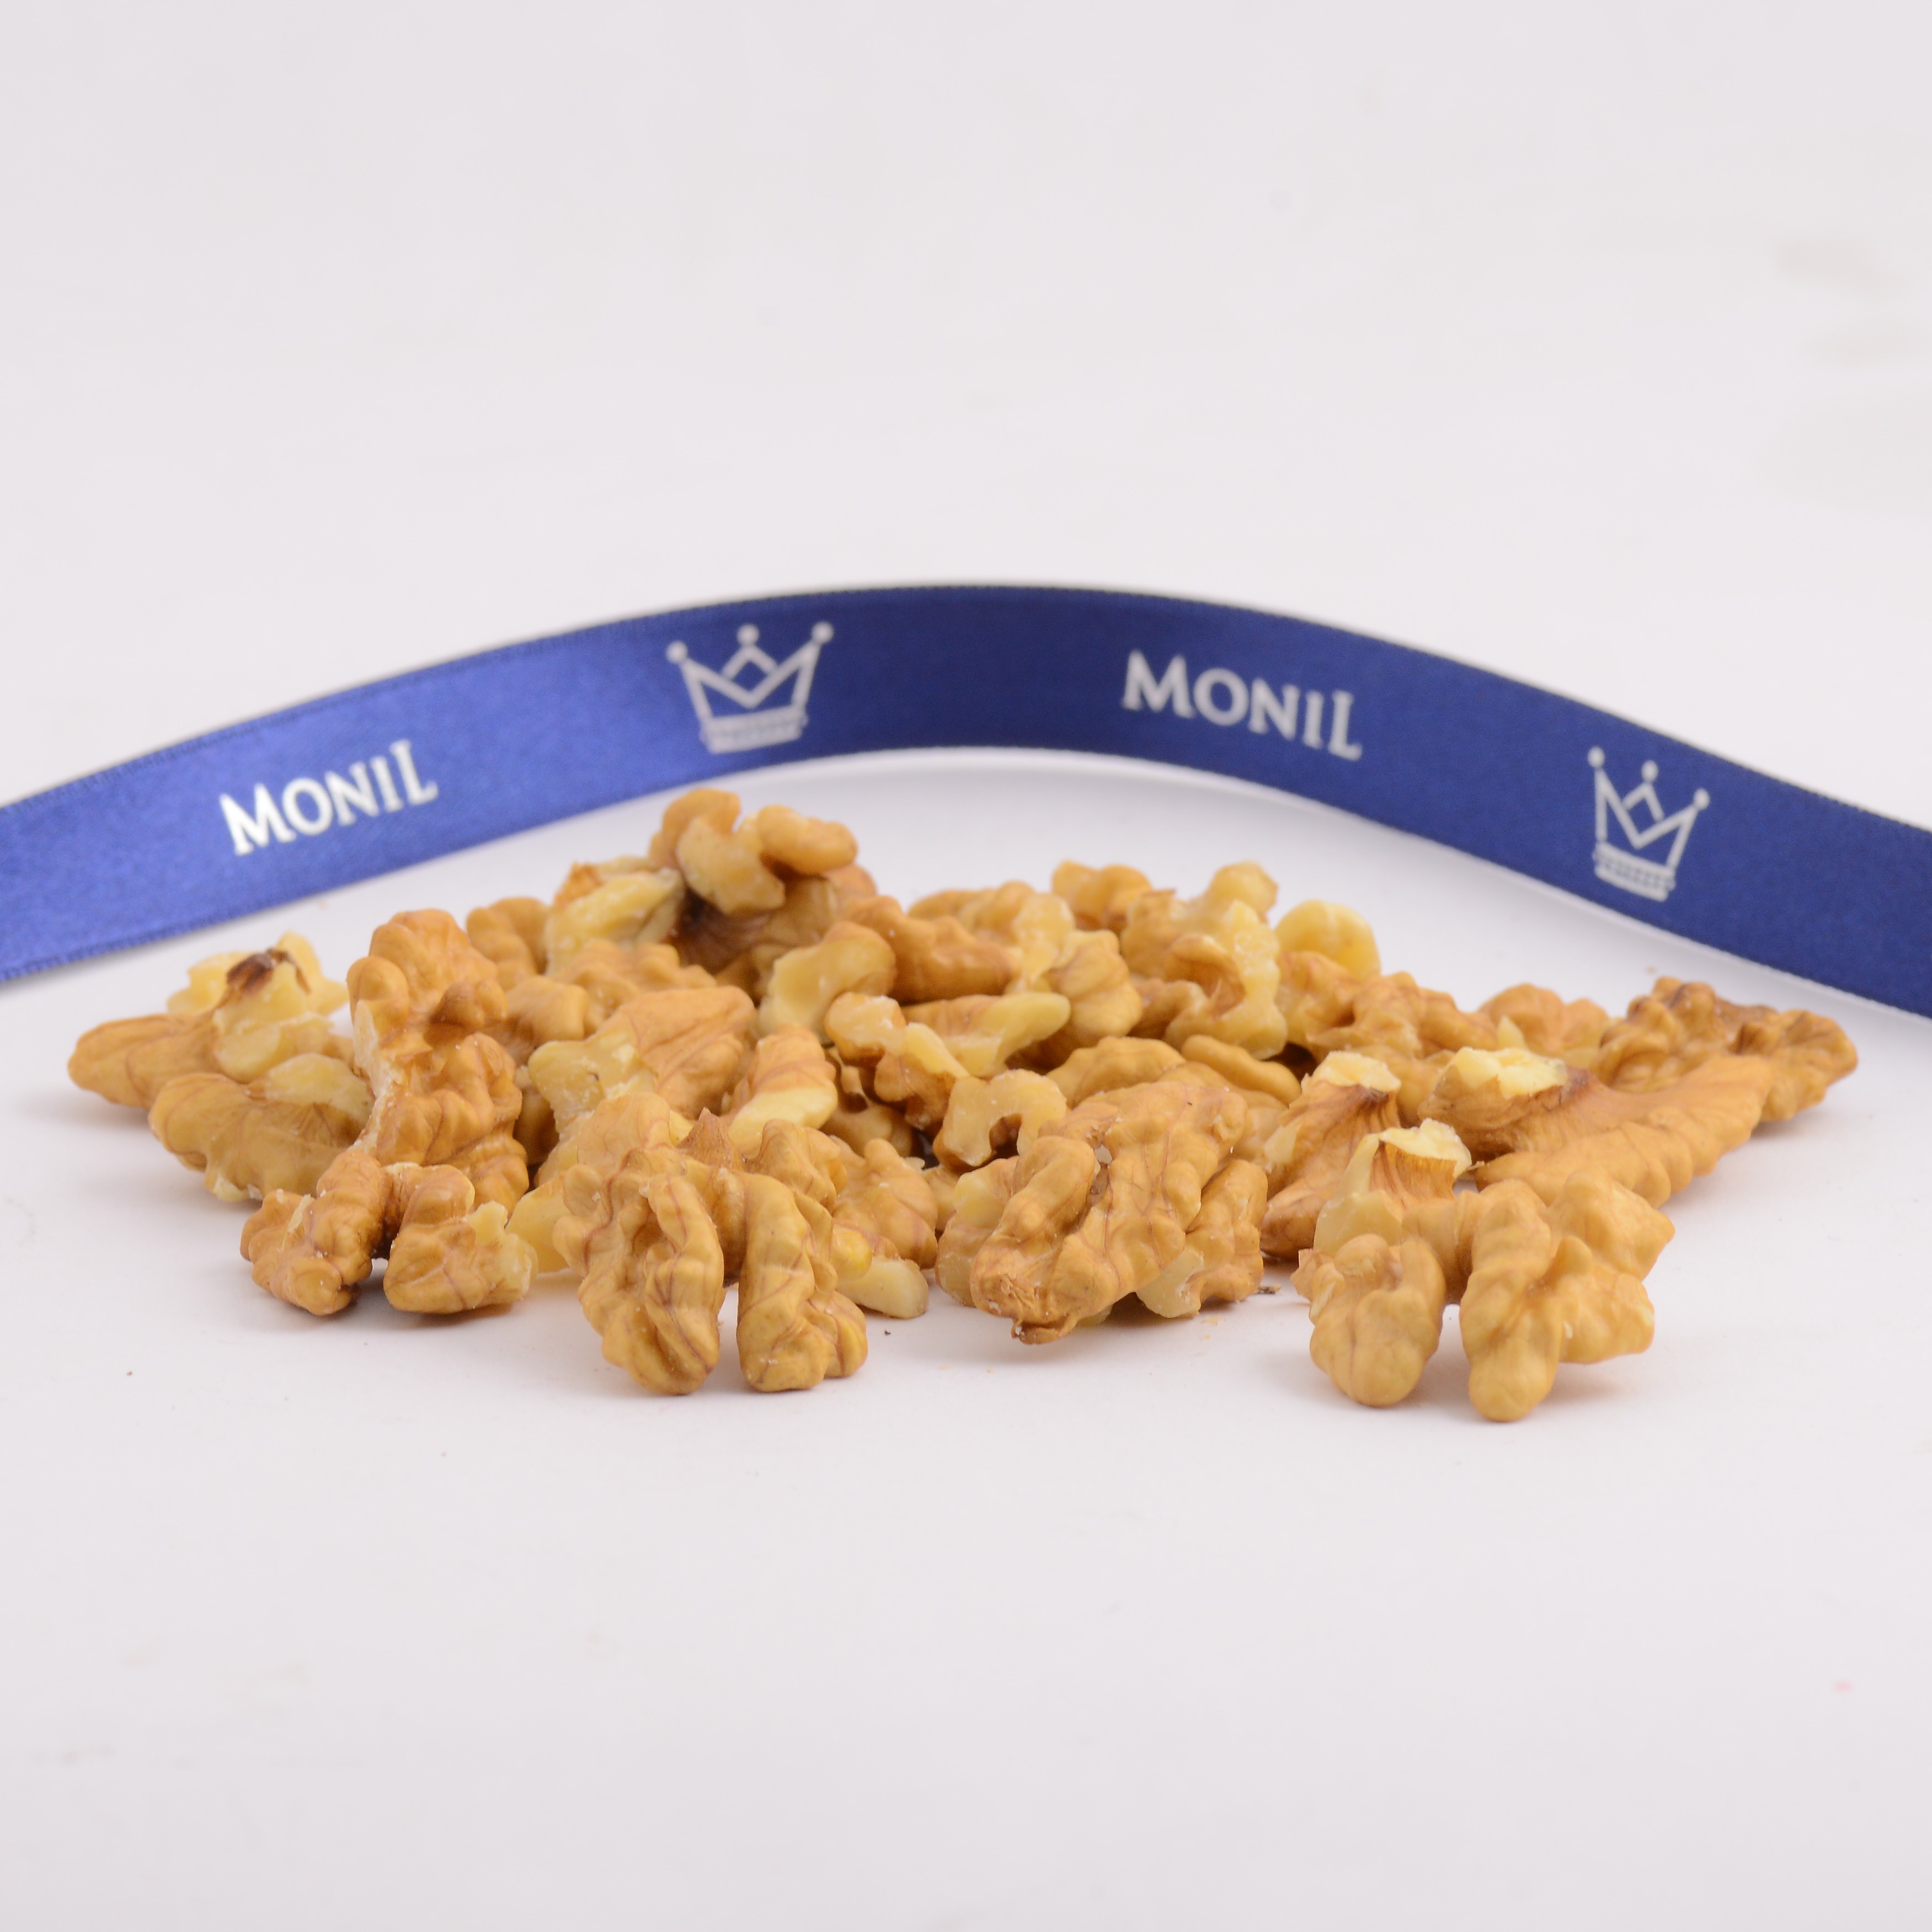 Etna walnut MONIL kernel, nut, snack food from Italy